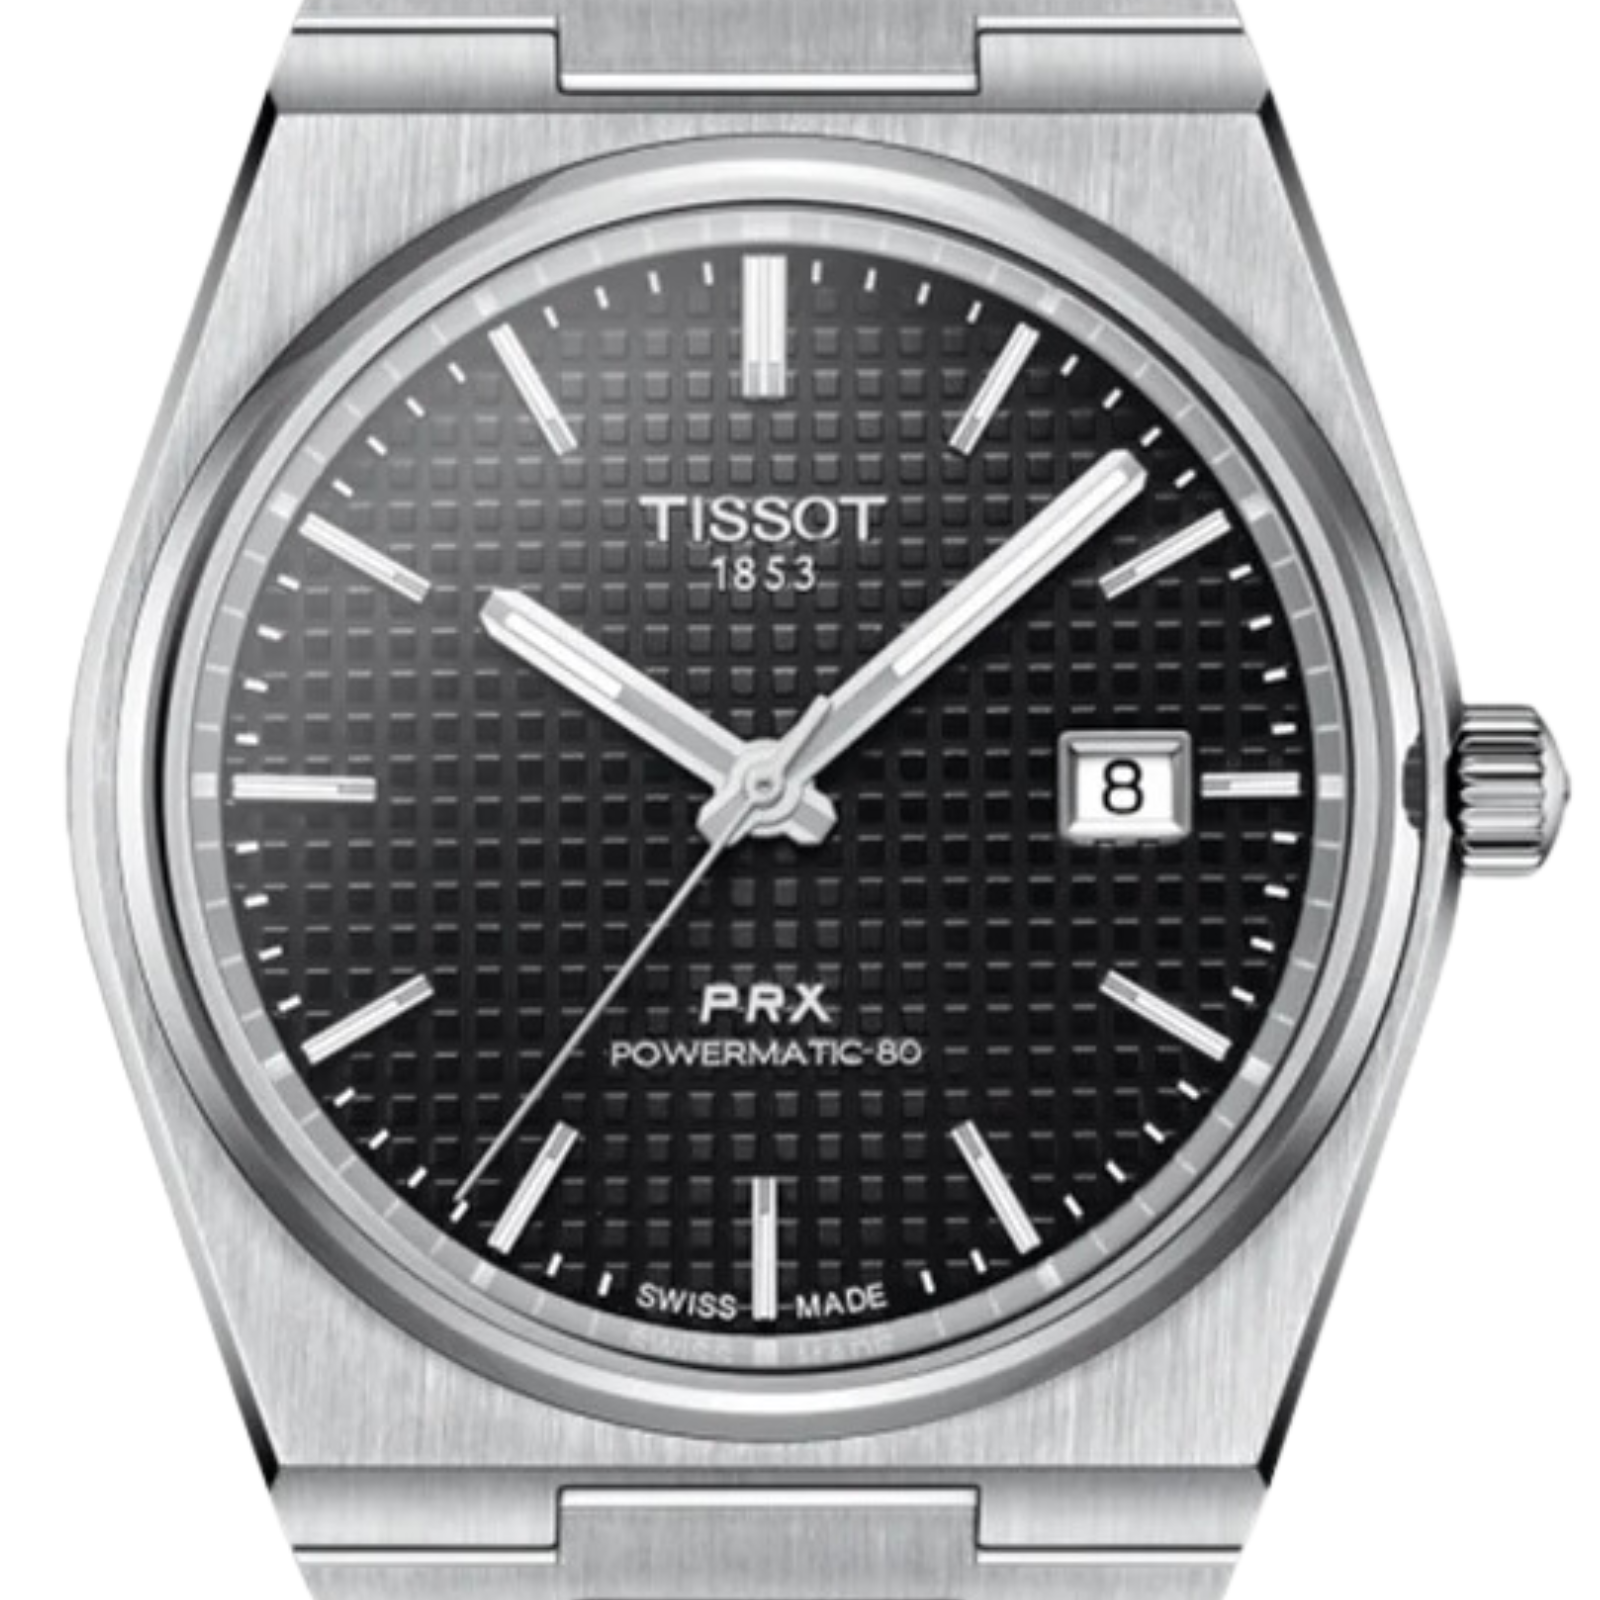 Tissot 1853 PRX Powermatic 80 T1374071105100 T137.407.11.051.00 Black Dial Watch